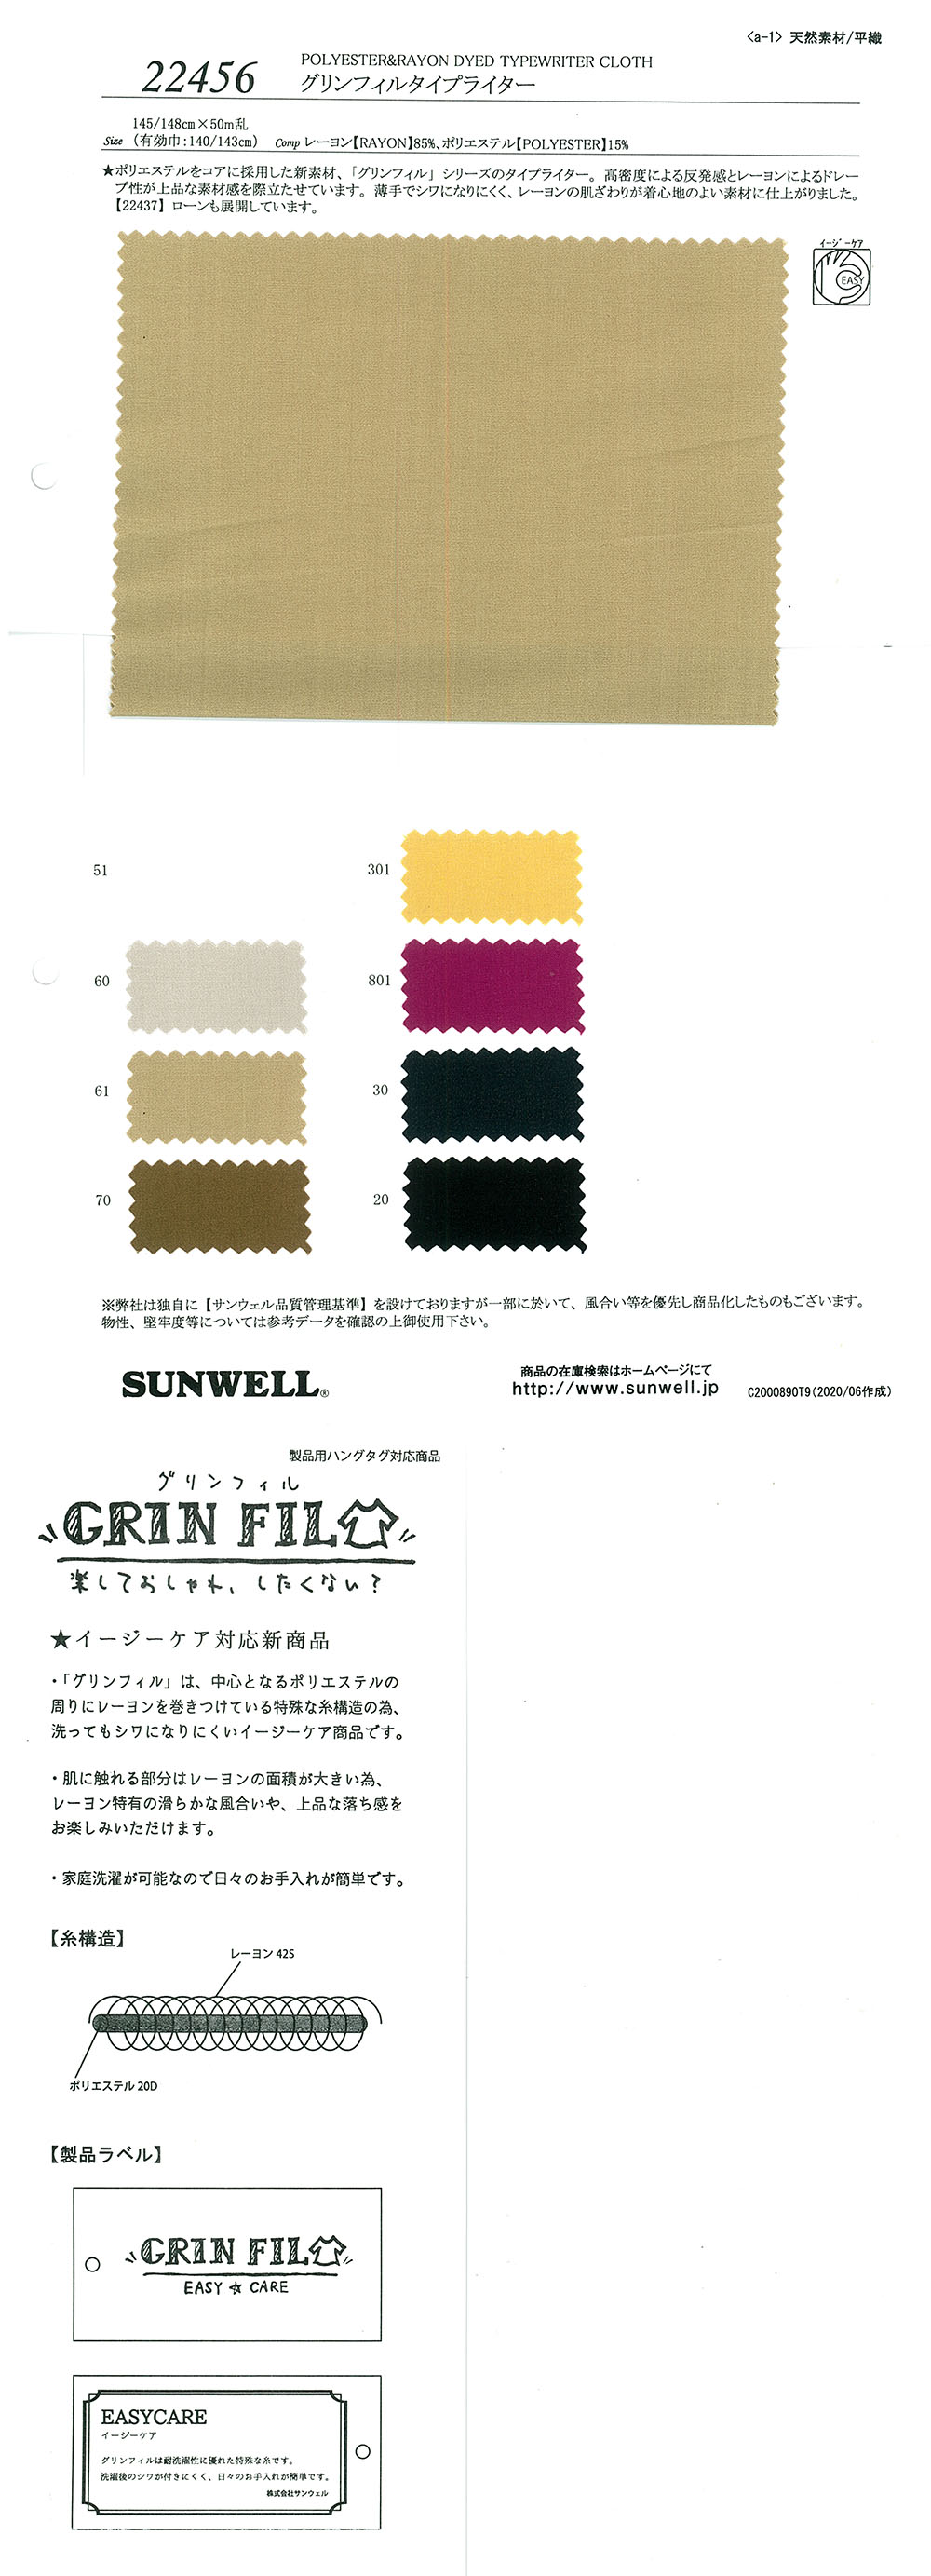 22456 Paño Para Máquina De Escribir GrinFil[Fabrica Textil] SUNWELL